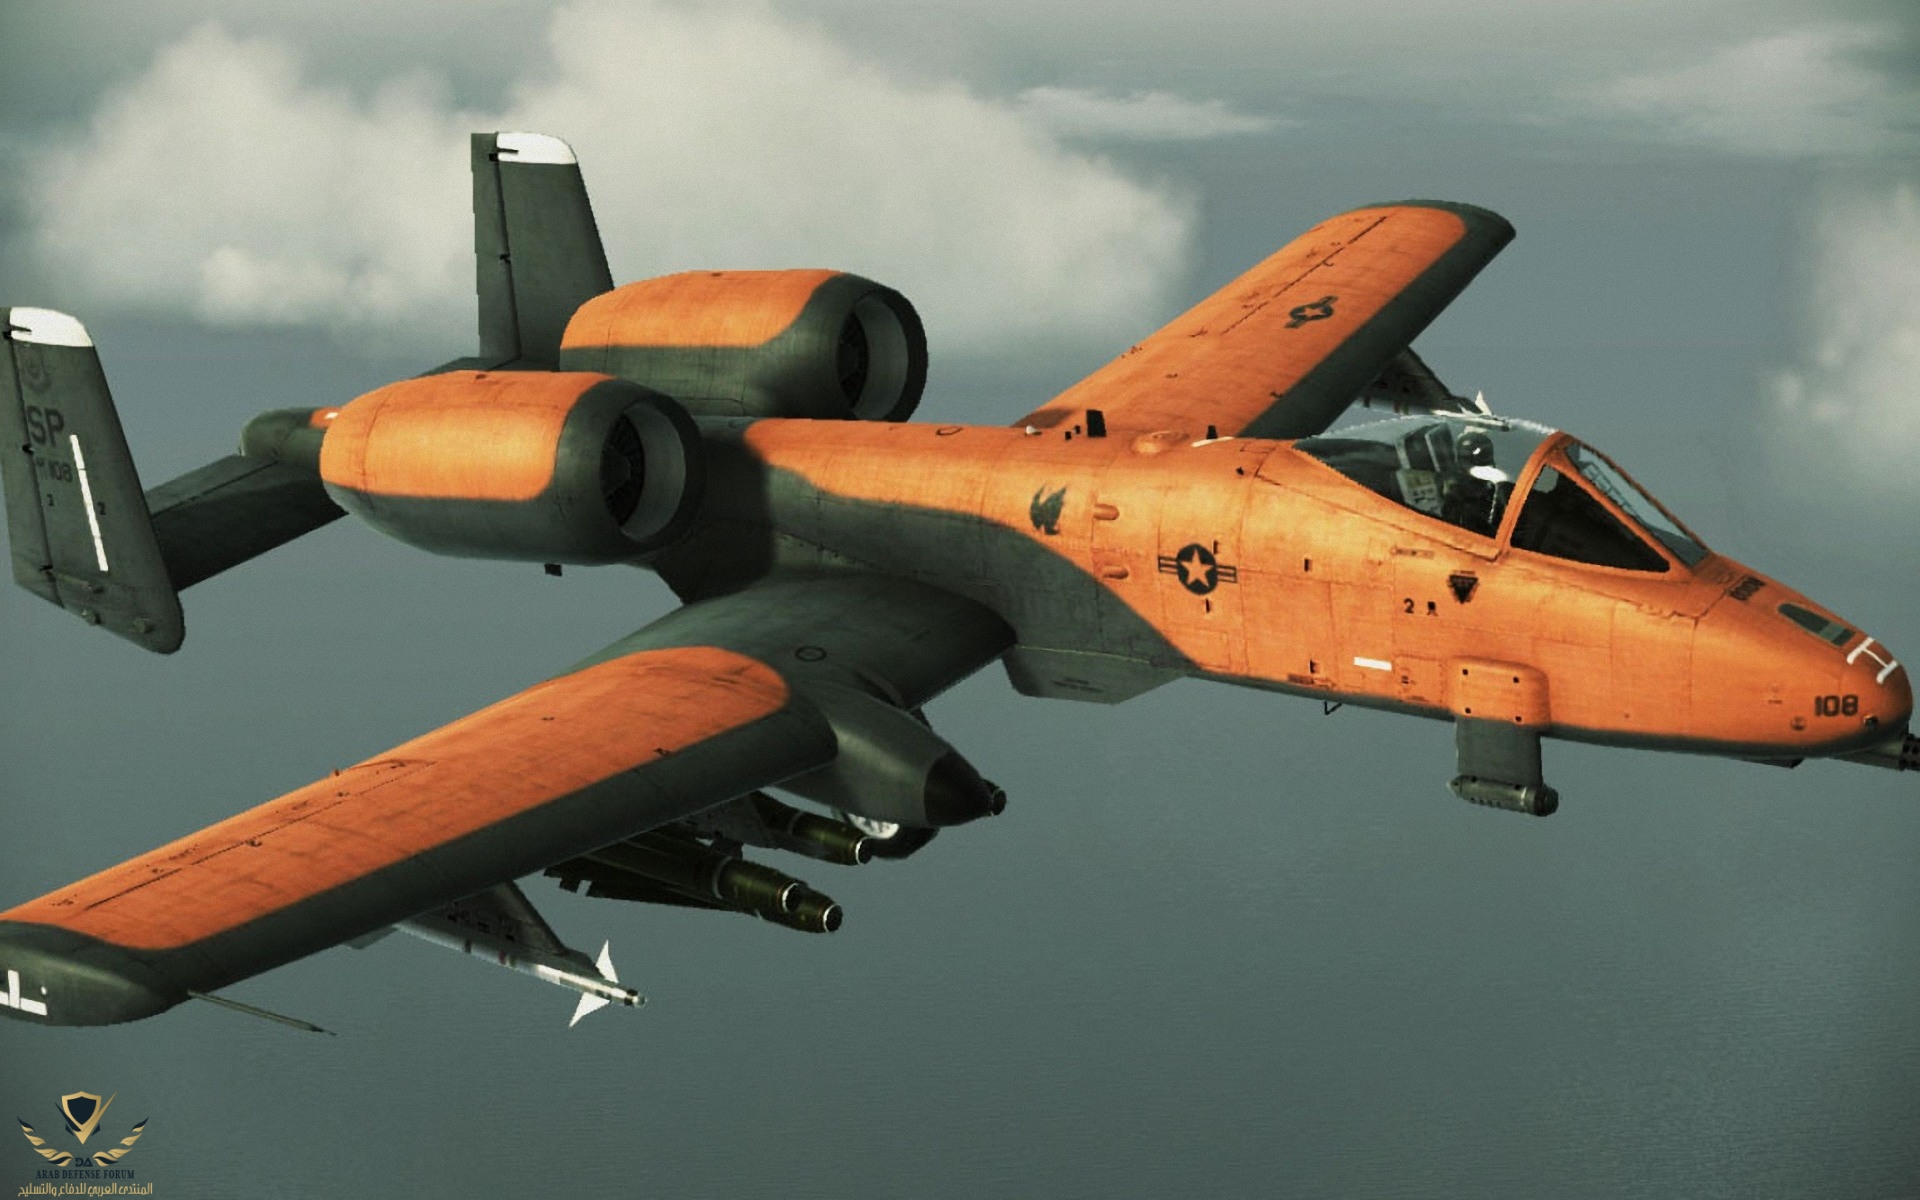 orange-fighter-plane-side_105987-1920x1200.jpg